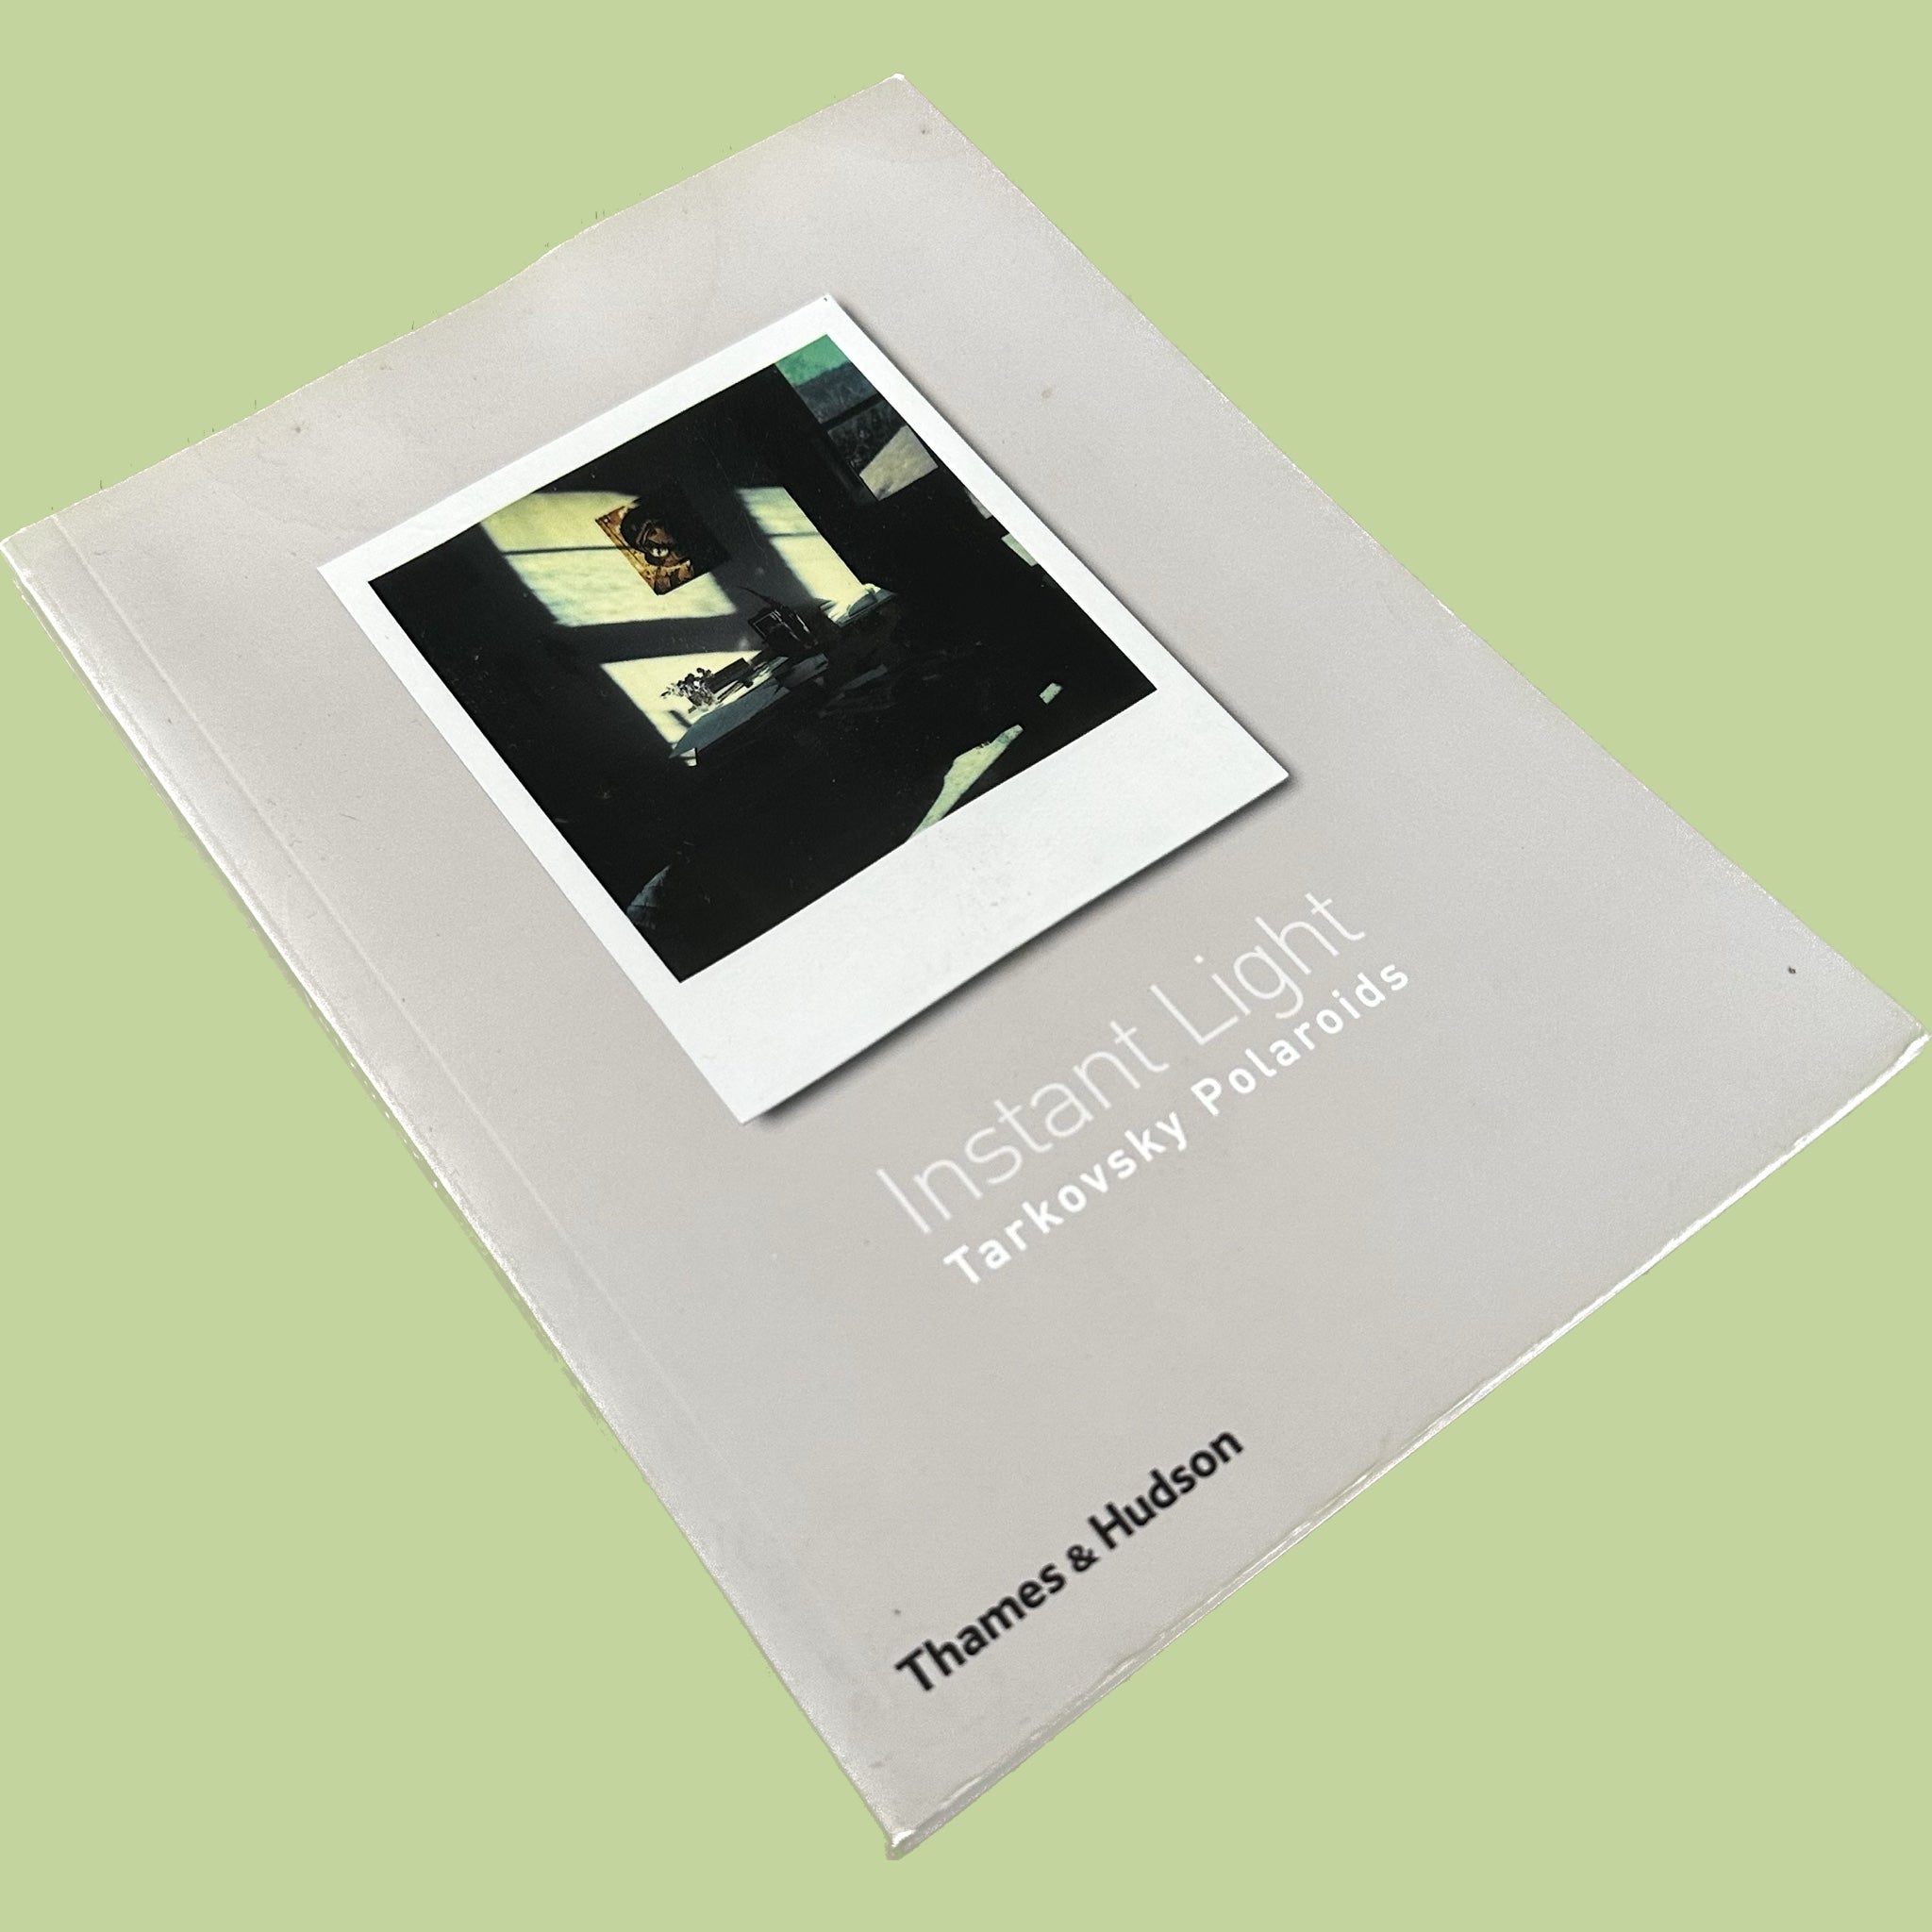 Instant Light by Andrei A. Tarkovsky – Black Gull Books